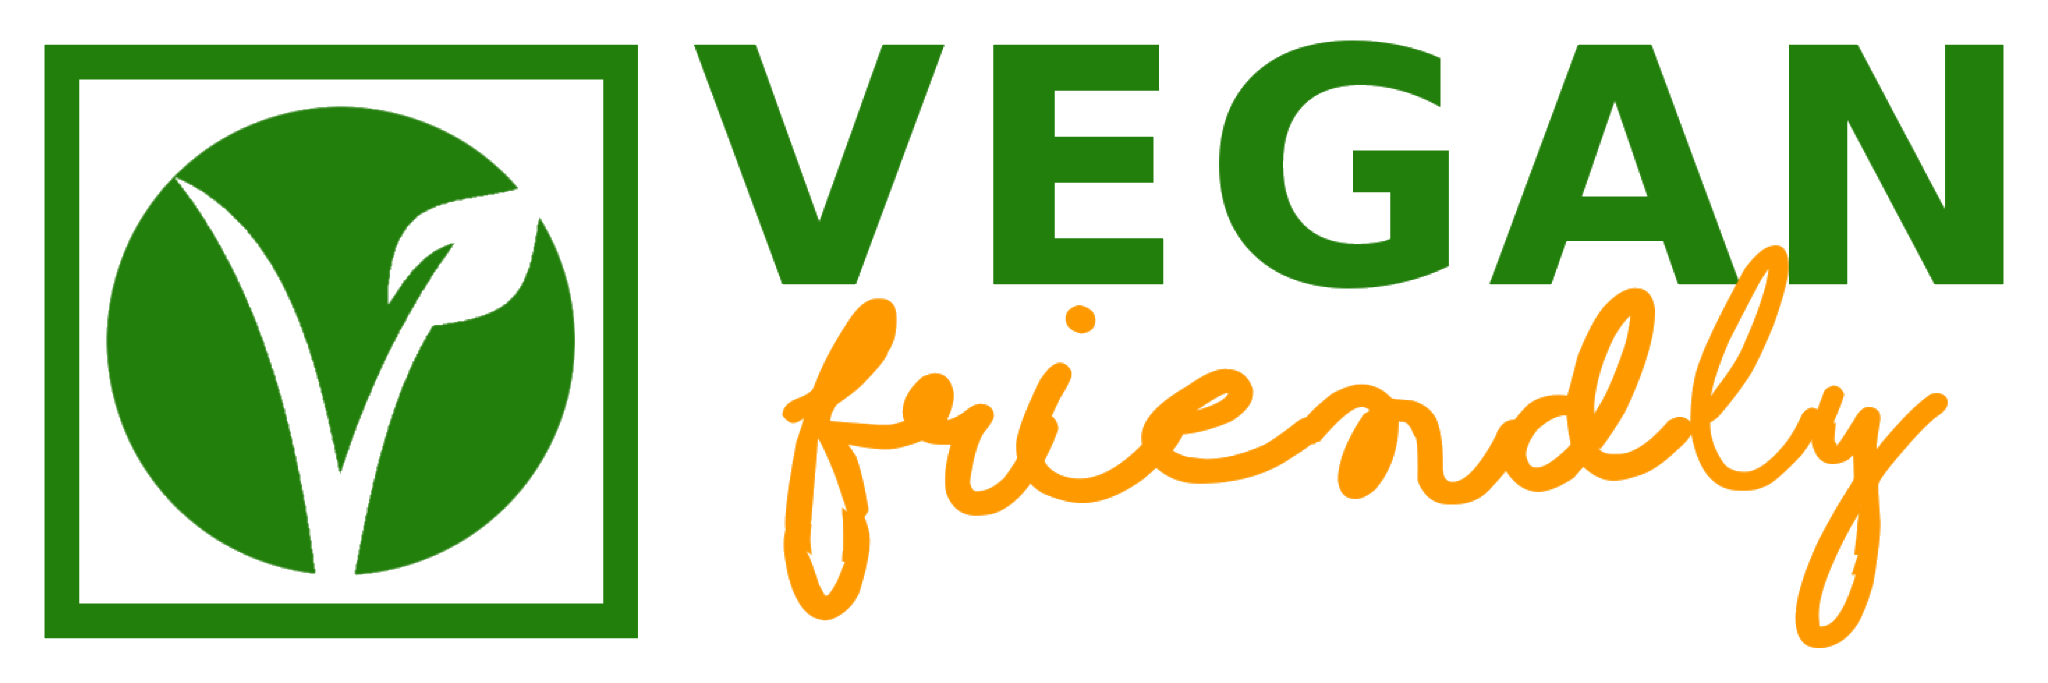 Vegan Logo PNG Pic